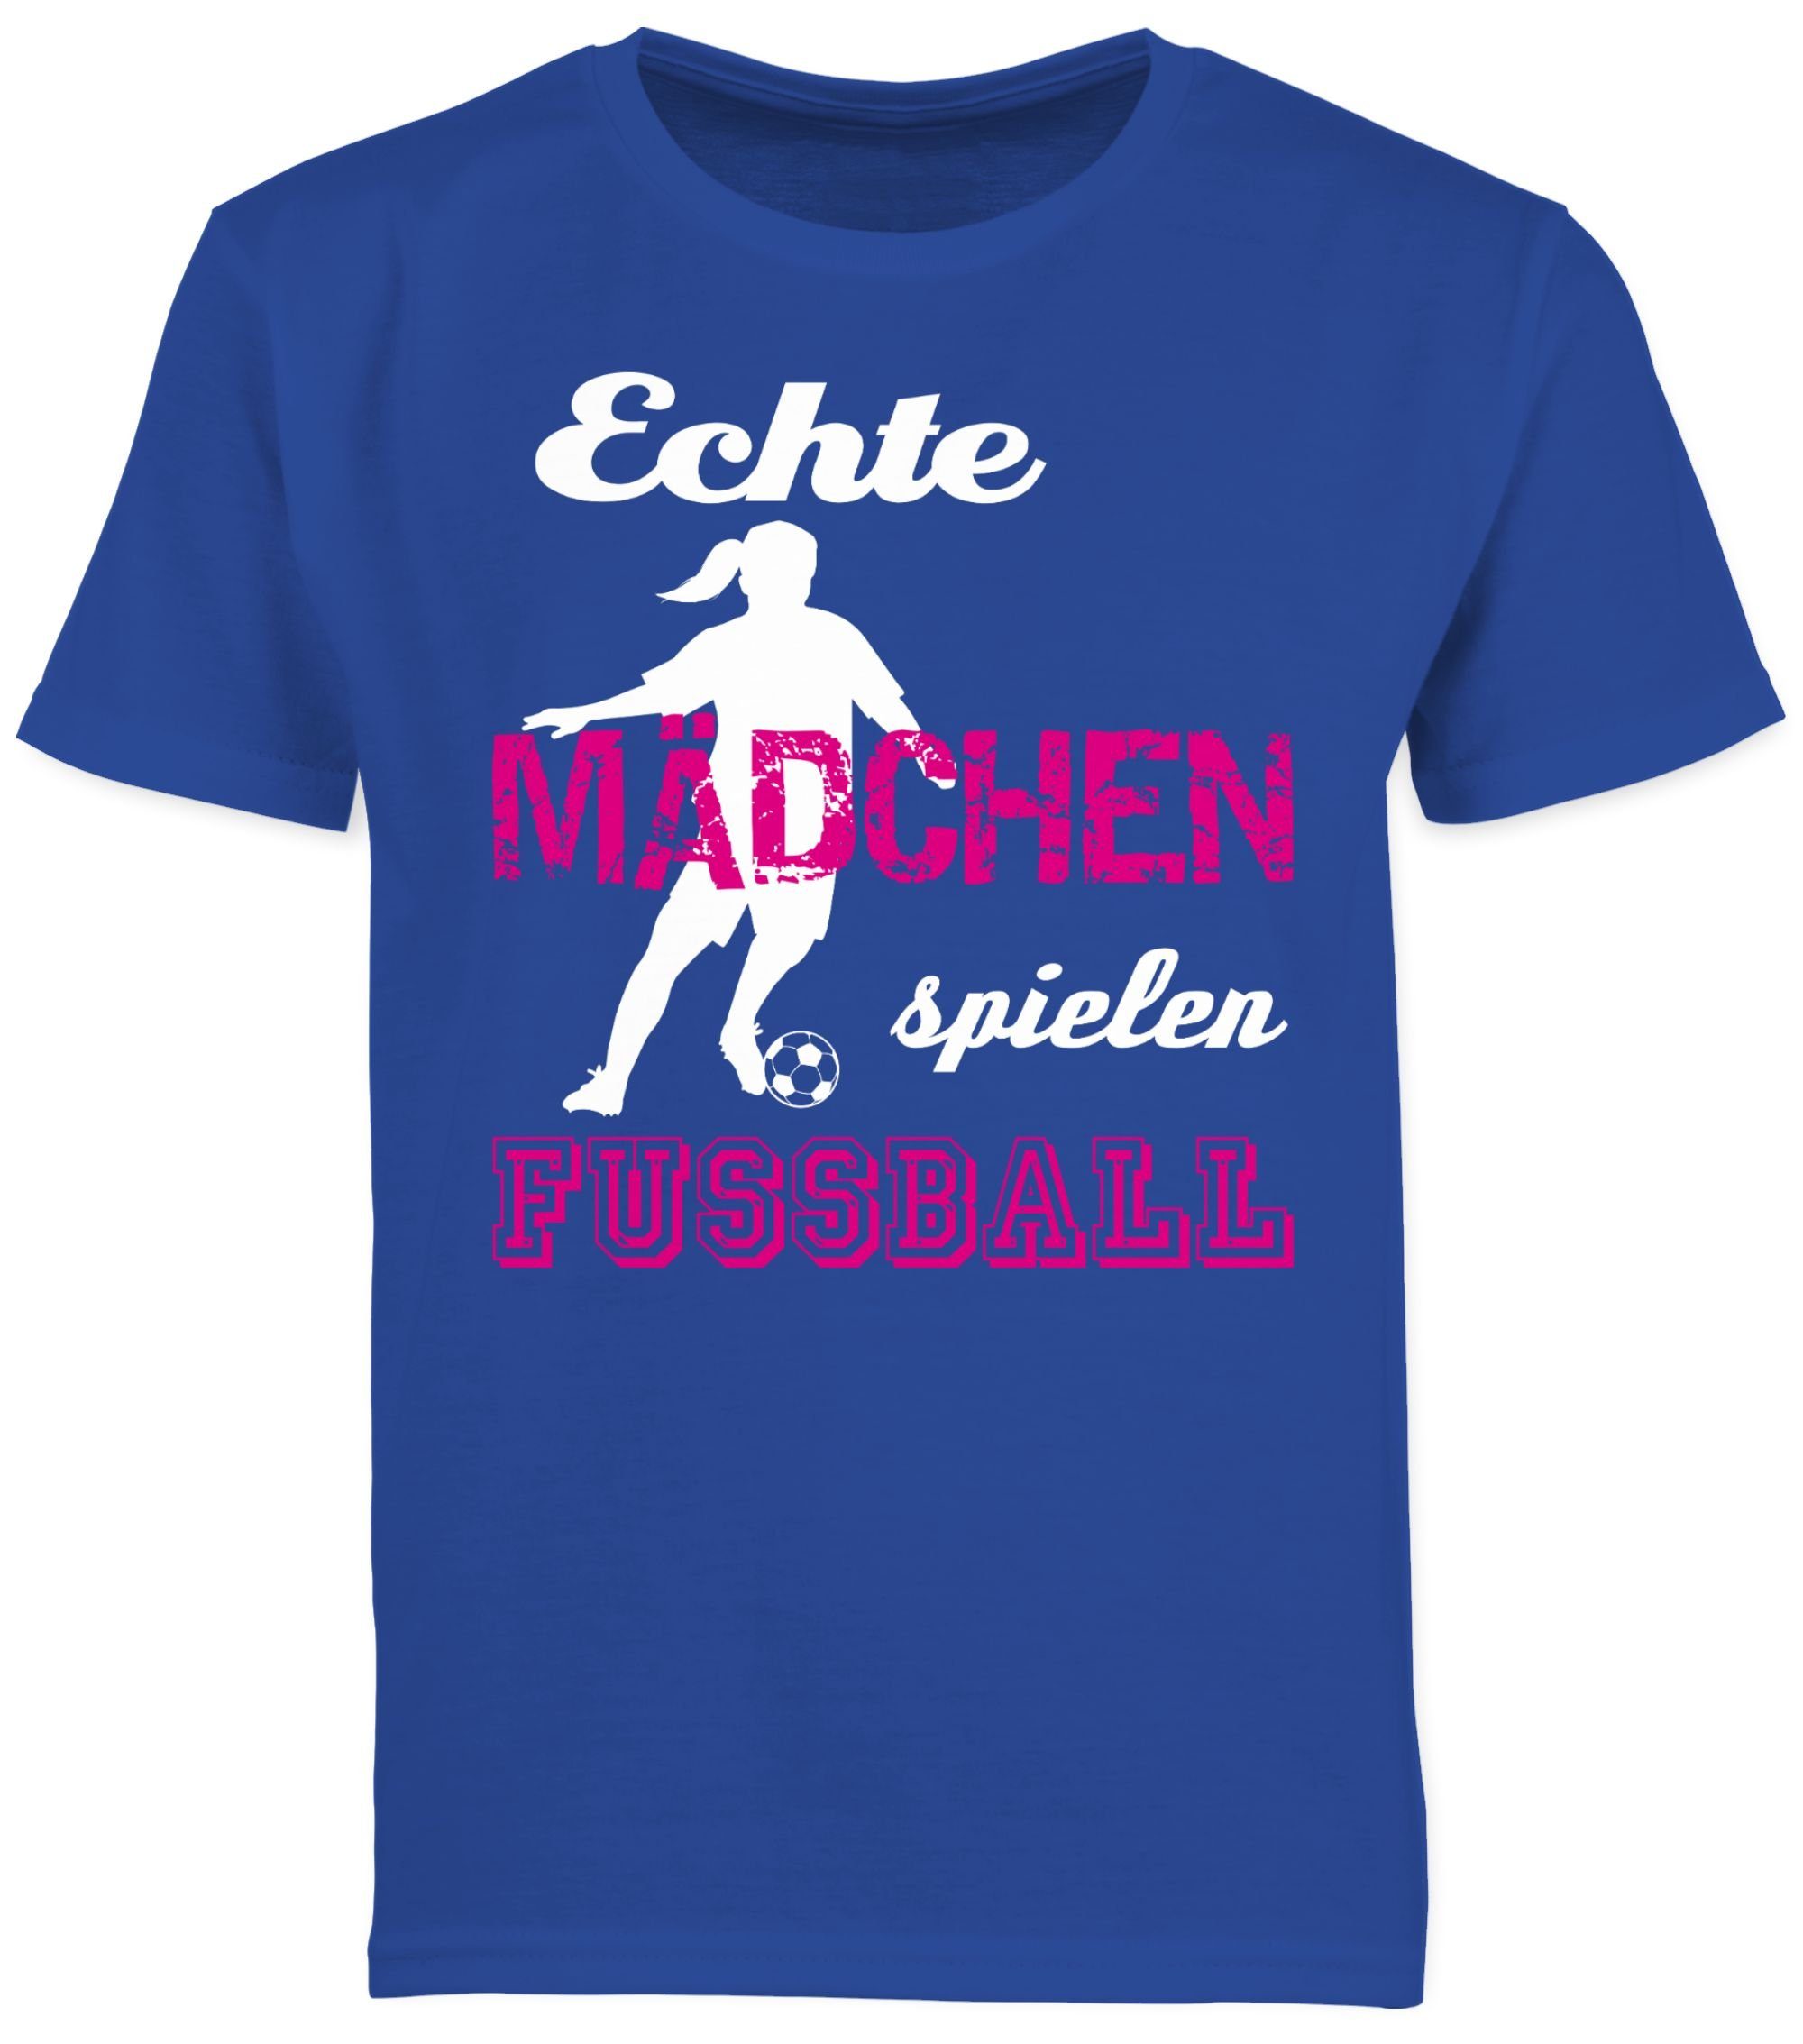 Shirtracer T-Shirt Echte Mädchen spielen Fußball Kinder Sport Kleidung 3 Royalblau